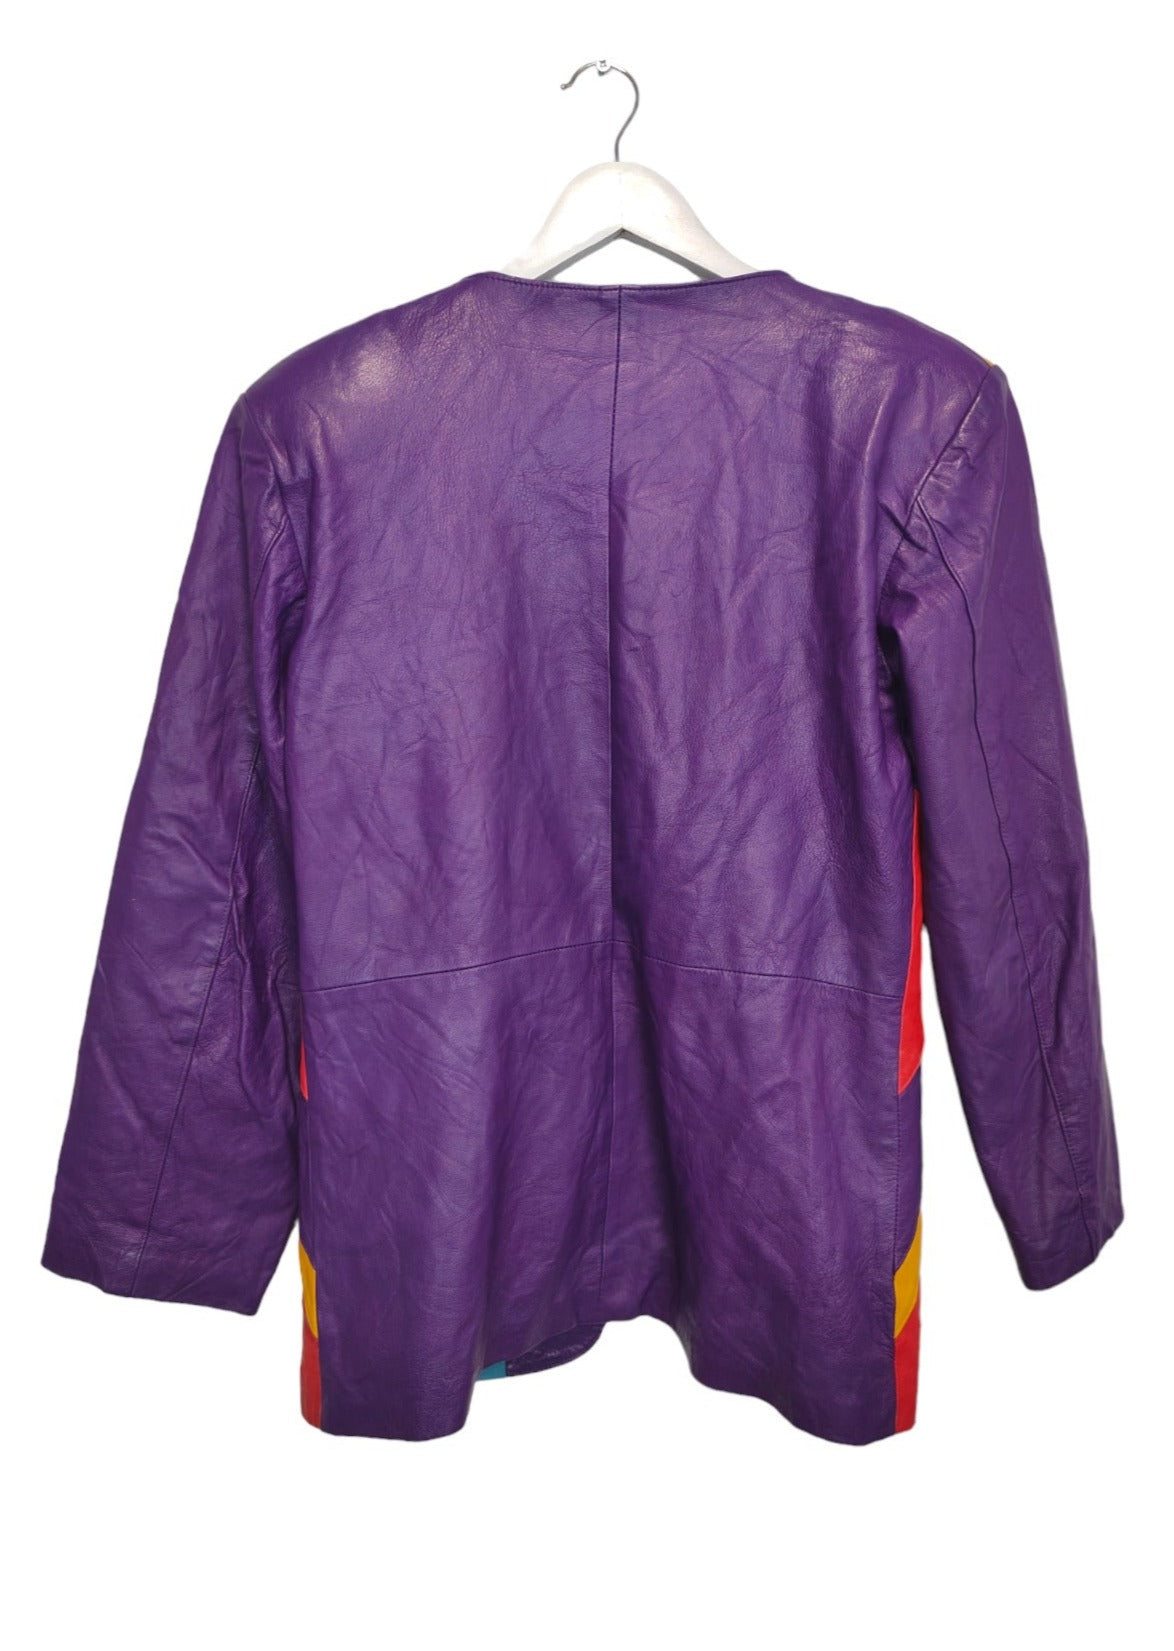 Vintage, Γυναικείο Δερμάτινο Πανωφόρι / Σακάκι LEATHER BEEZ σε Μωβ Χρώμα (Medium)